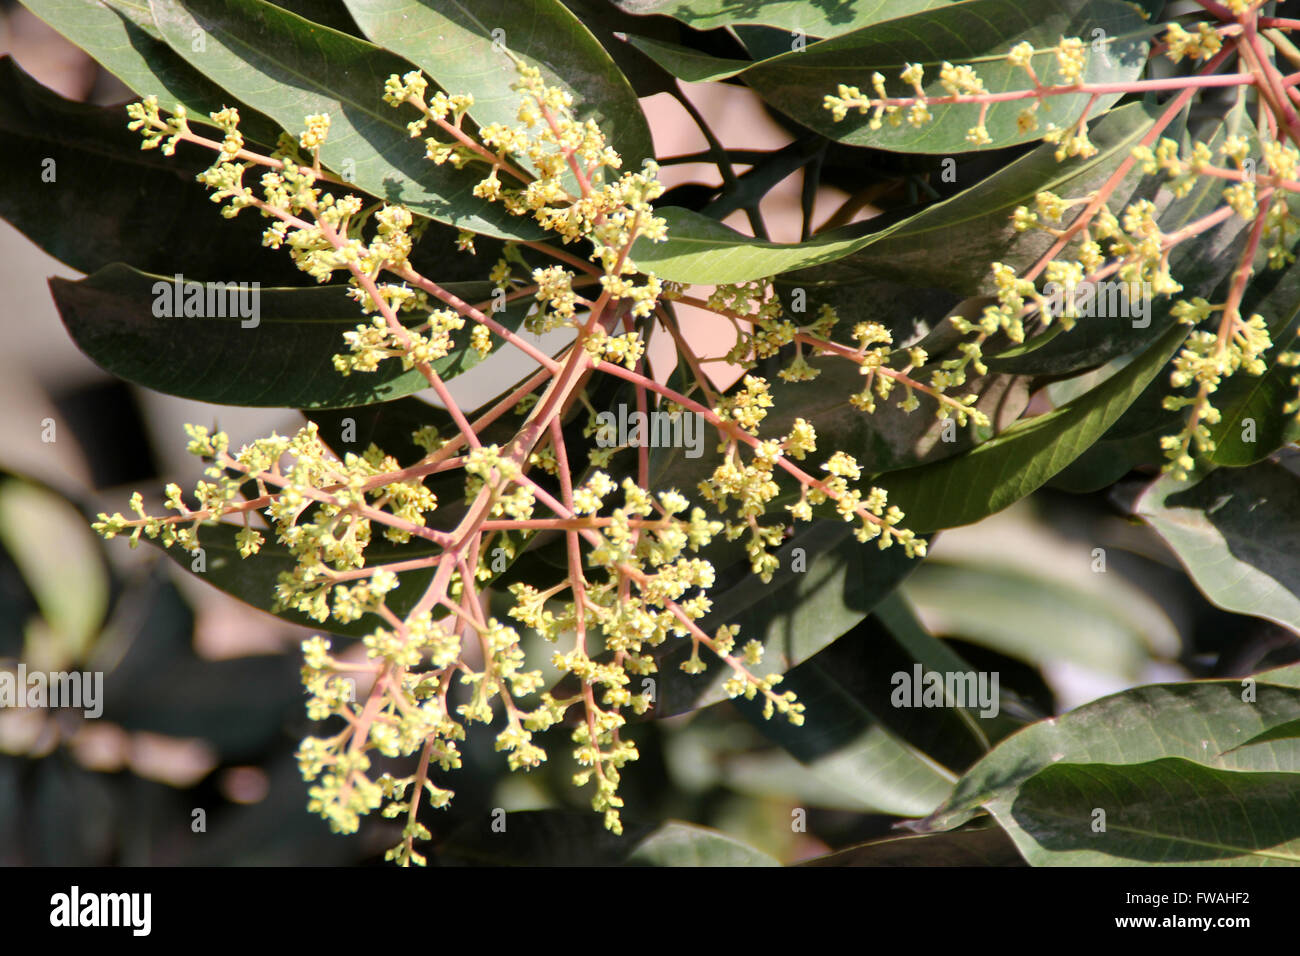 https://c8.alamy.com/comp/FWAHF2/mango-tree-in-flower-mangifera-indica-evergreen-tree-lanceolate-leaves-FWAHF2.jpg